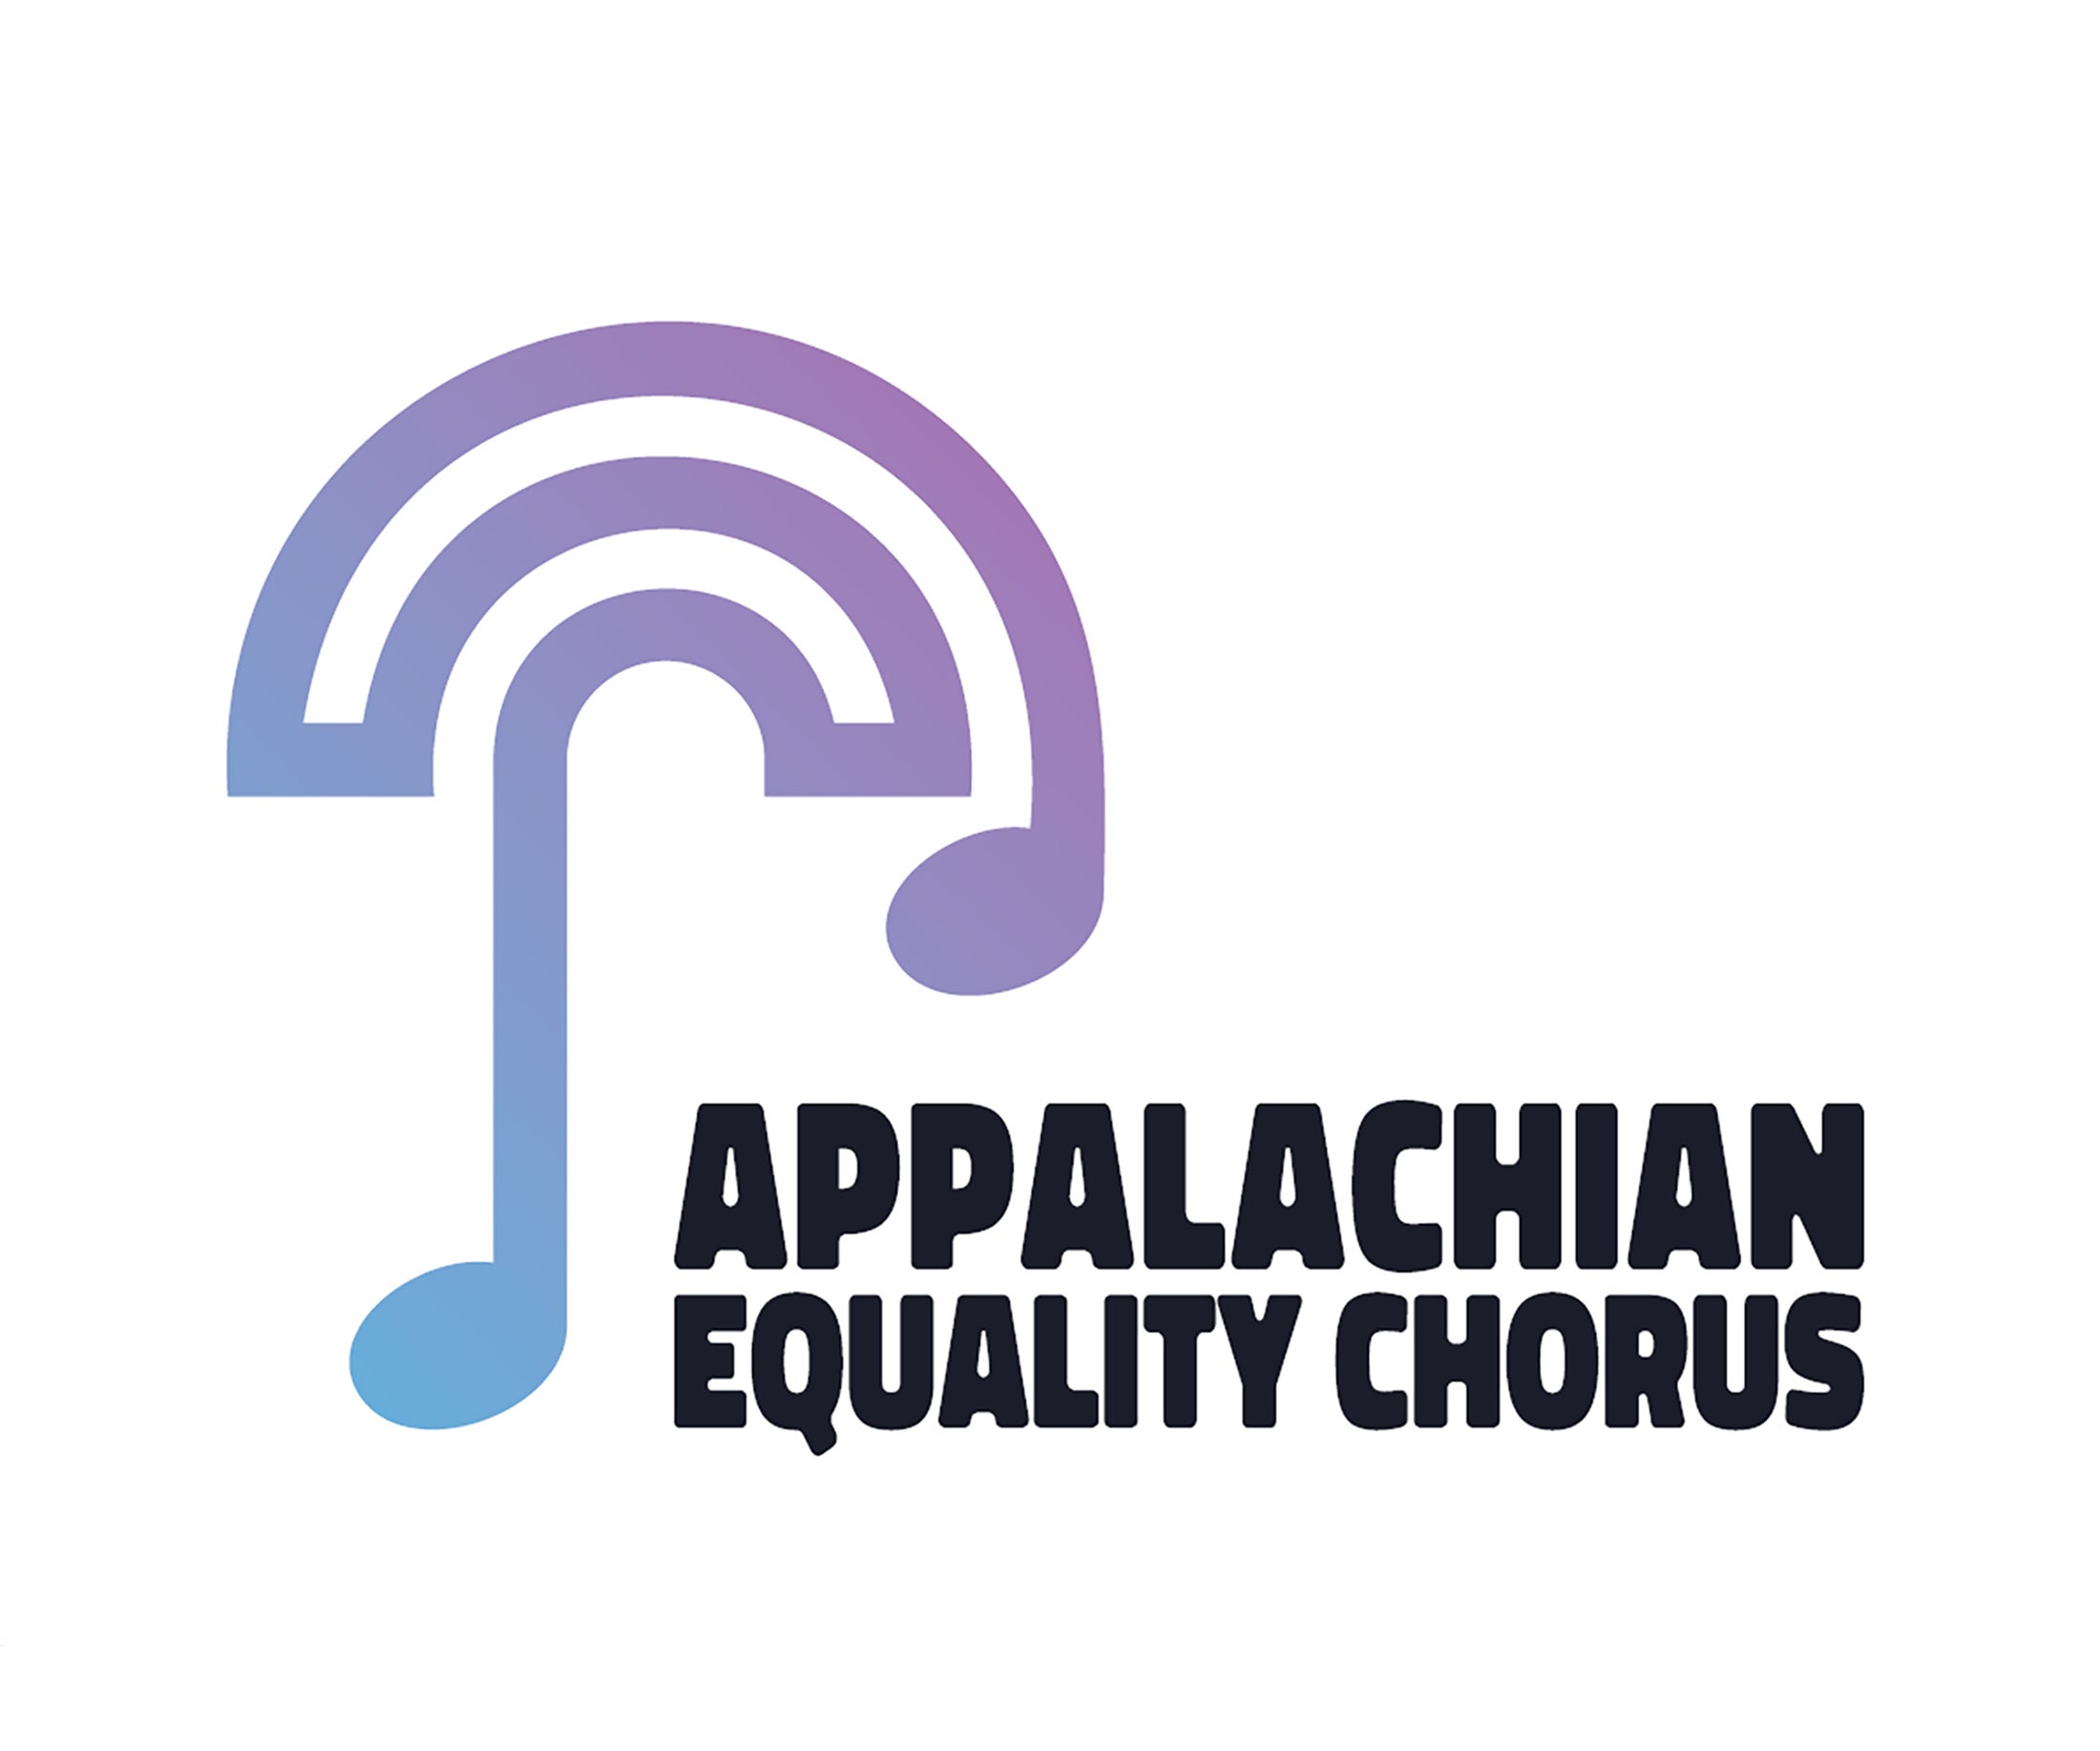 Appalachian Equality Chorus Presents "The Rainbow Runs Over Me" presale passwords